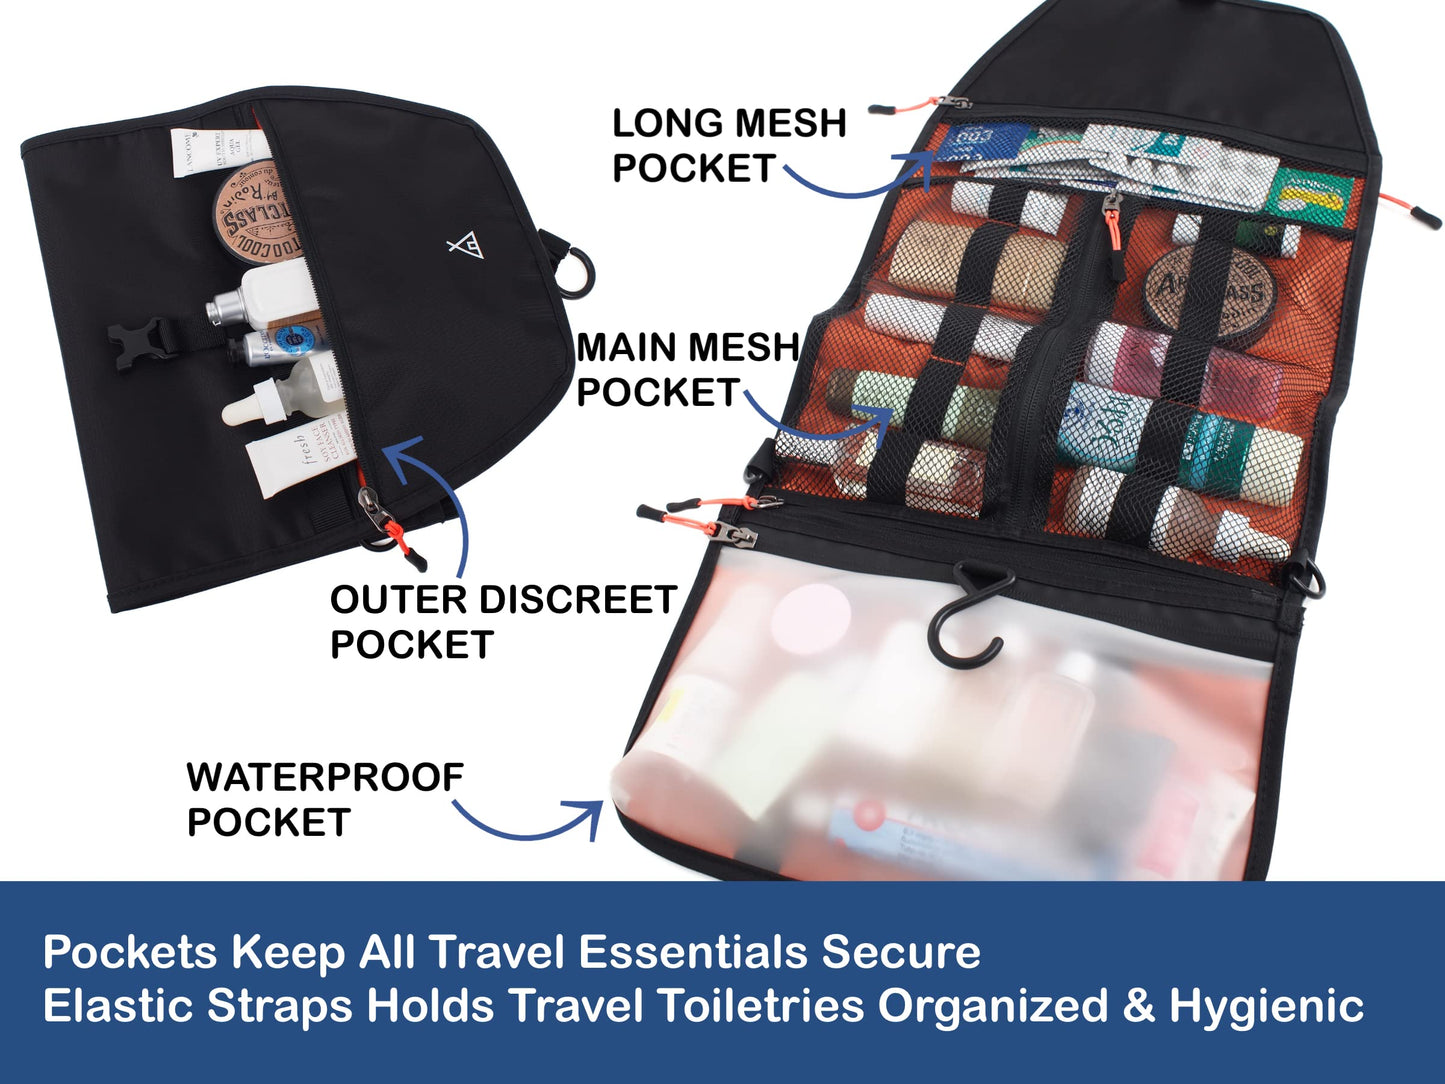 Compact Travel Toiletry Bag, Hanging Toiletry Bag for Men, Roll Up Dopp Kit Bathroom Shaving Shower Medicine Hygiene Bag for Traveling, Waterproof Lightweight Organizer for Gym Camping Grooming, Black